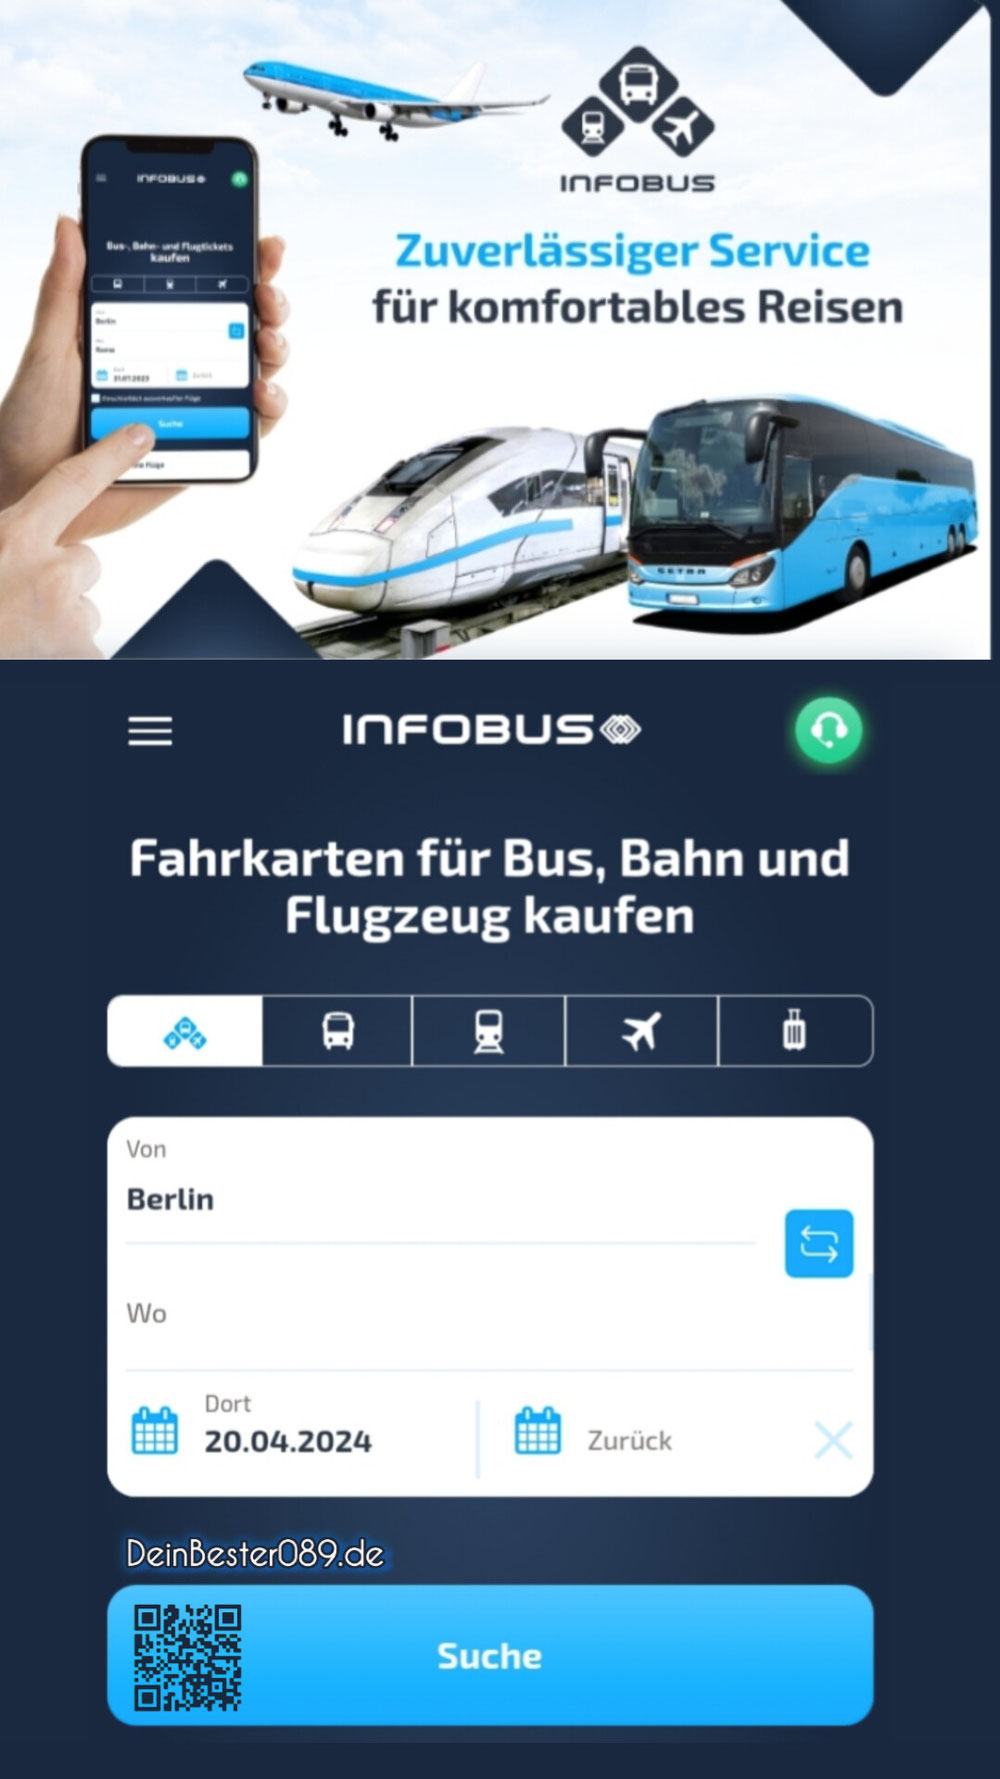 ReiseVeranstalter 3 (InfoBus)